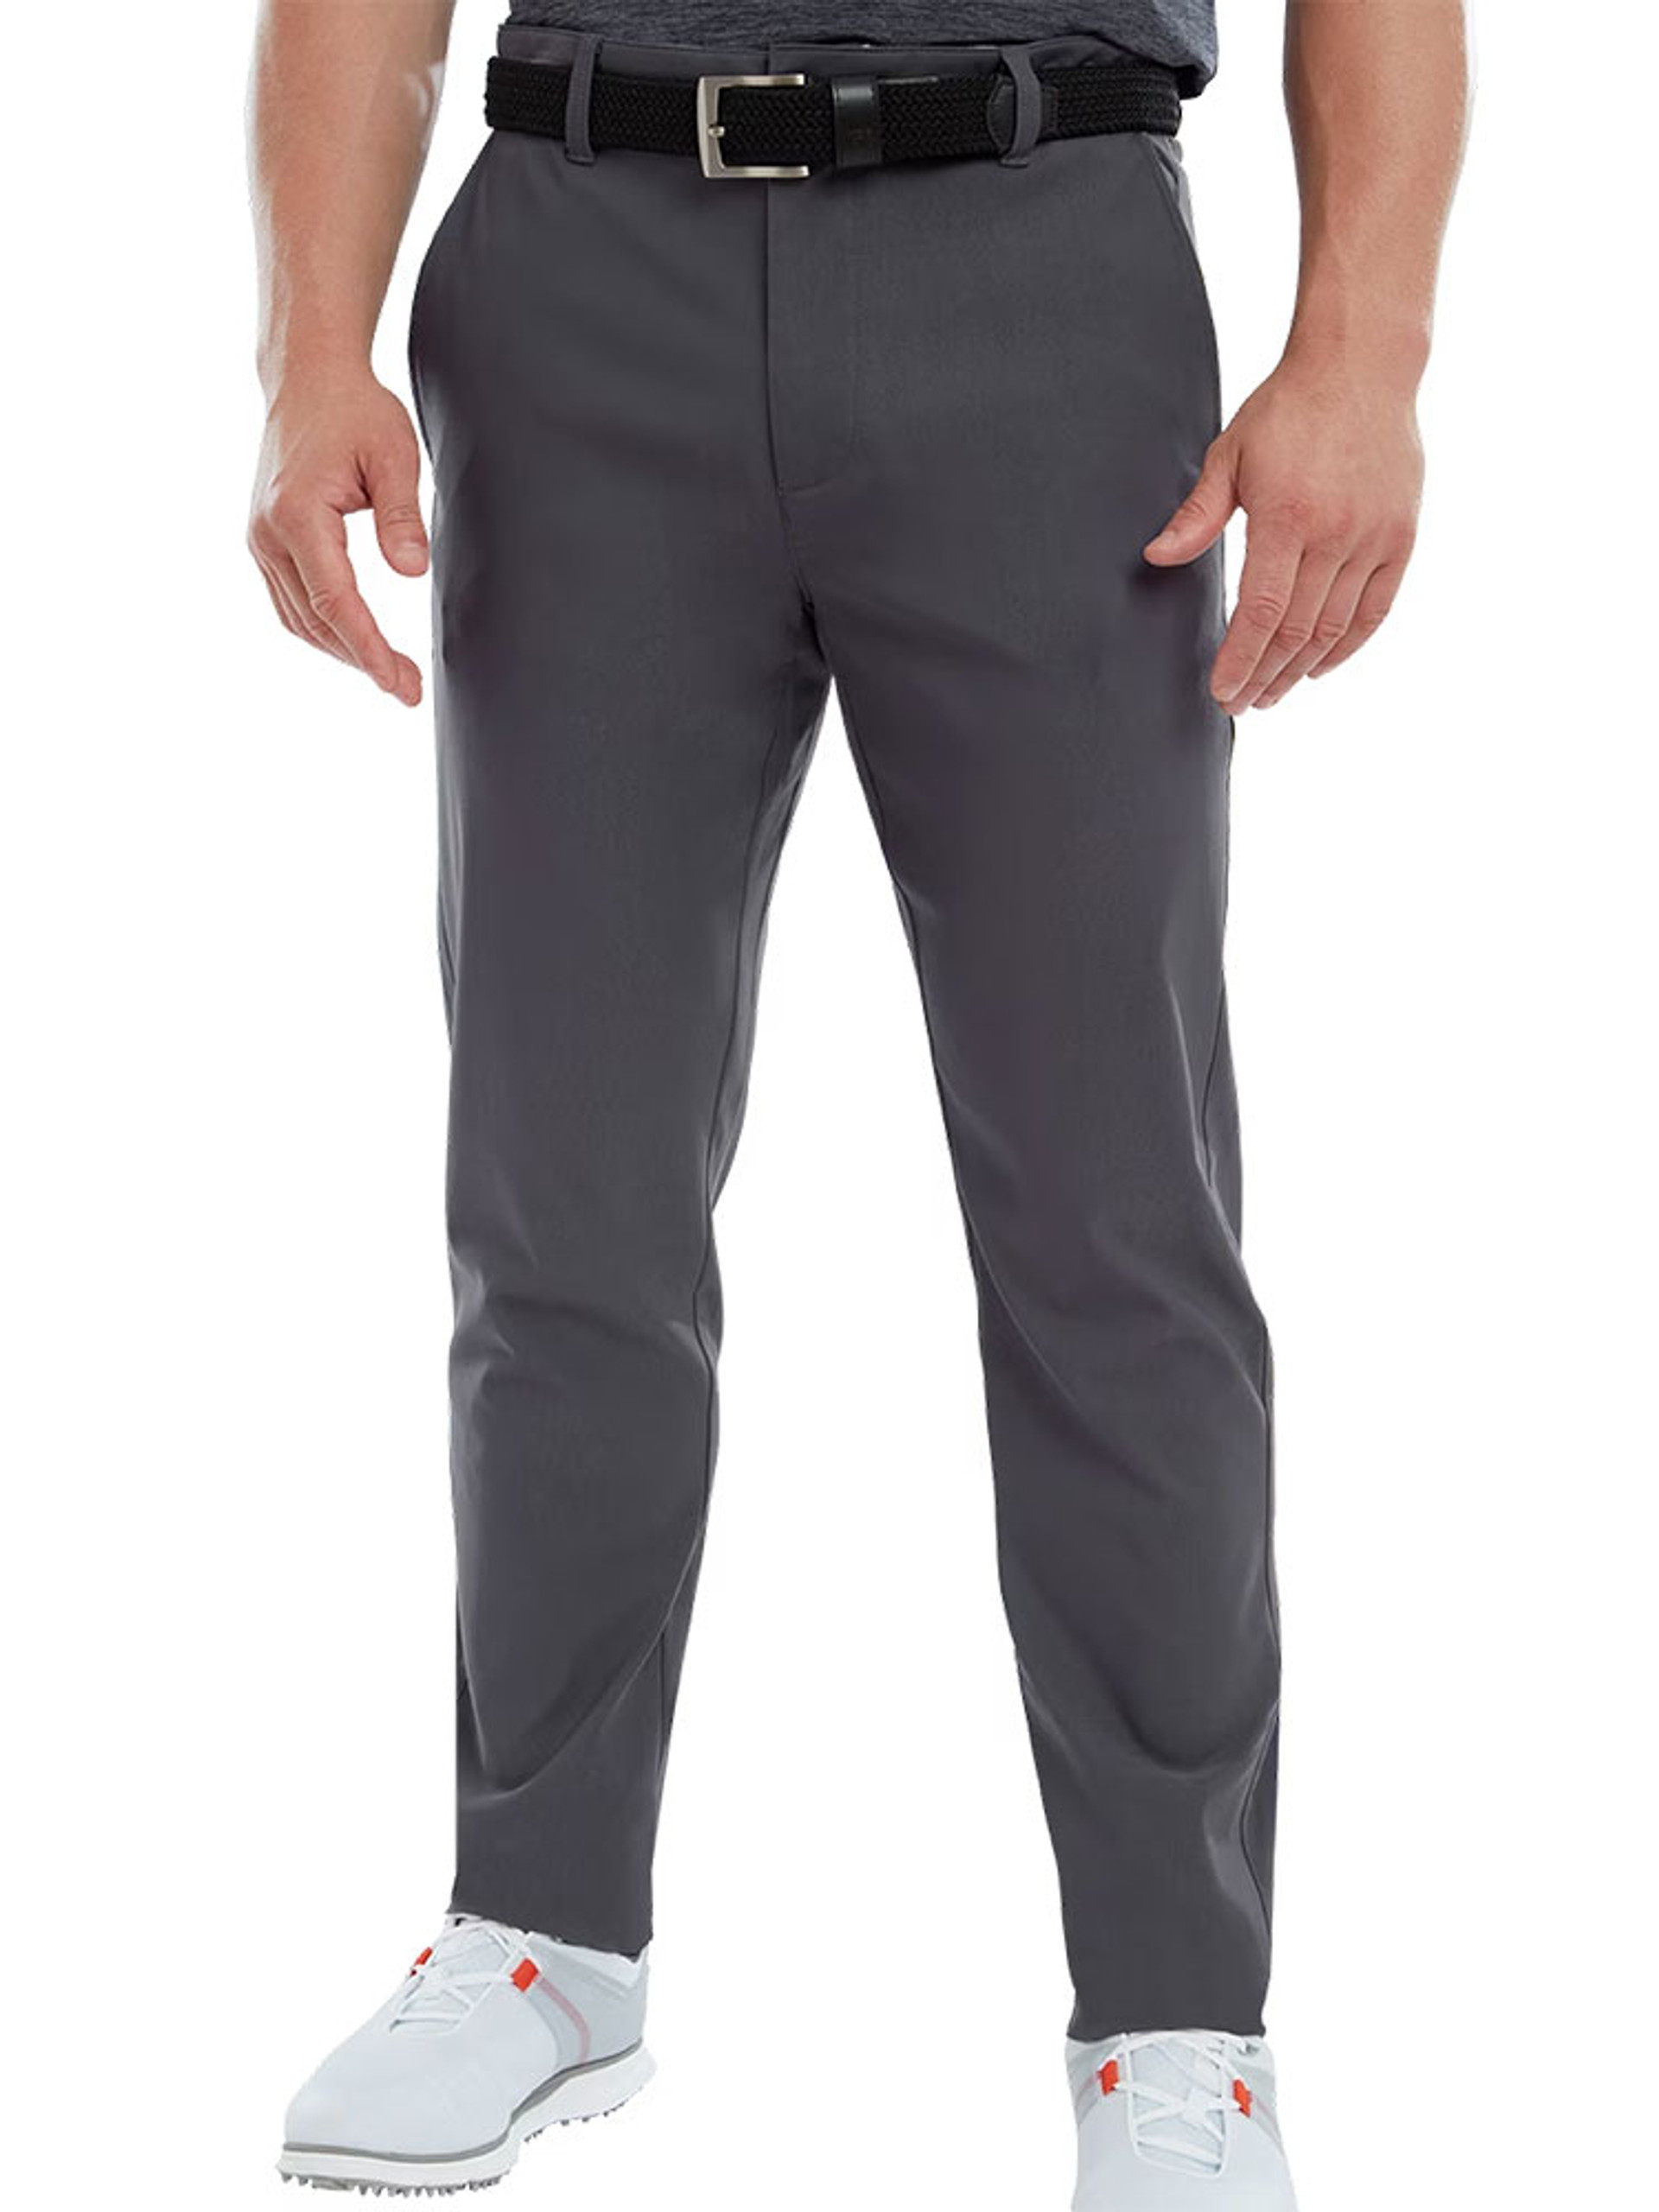 FootJoy Thermoseries Pants - Charcoal - Mens | GolfBox